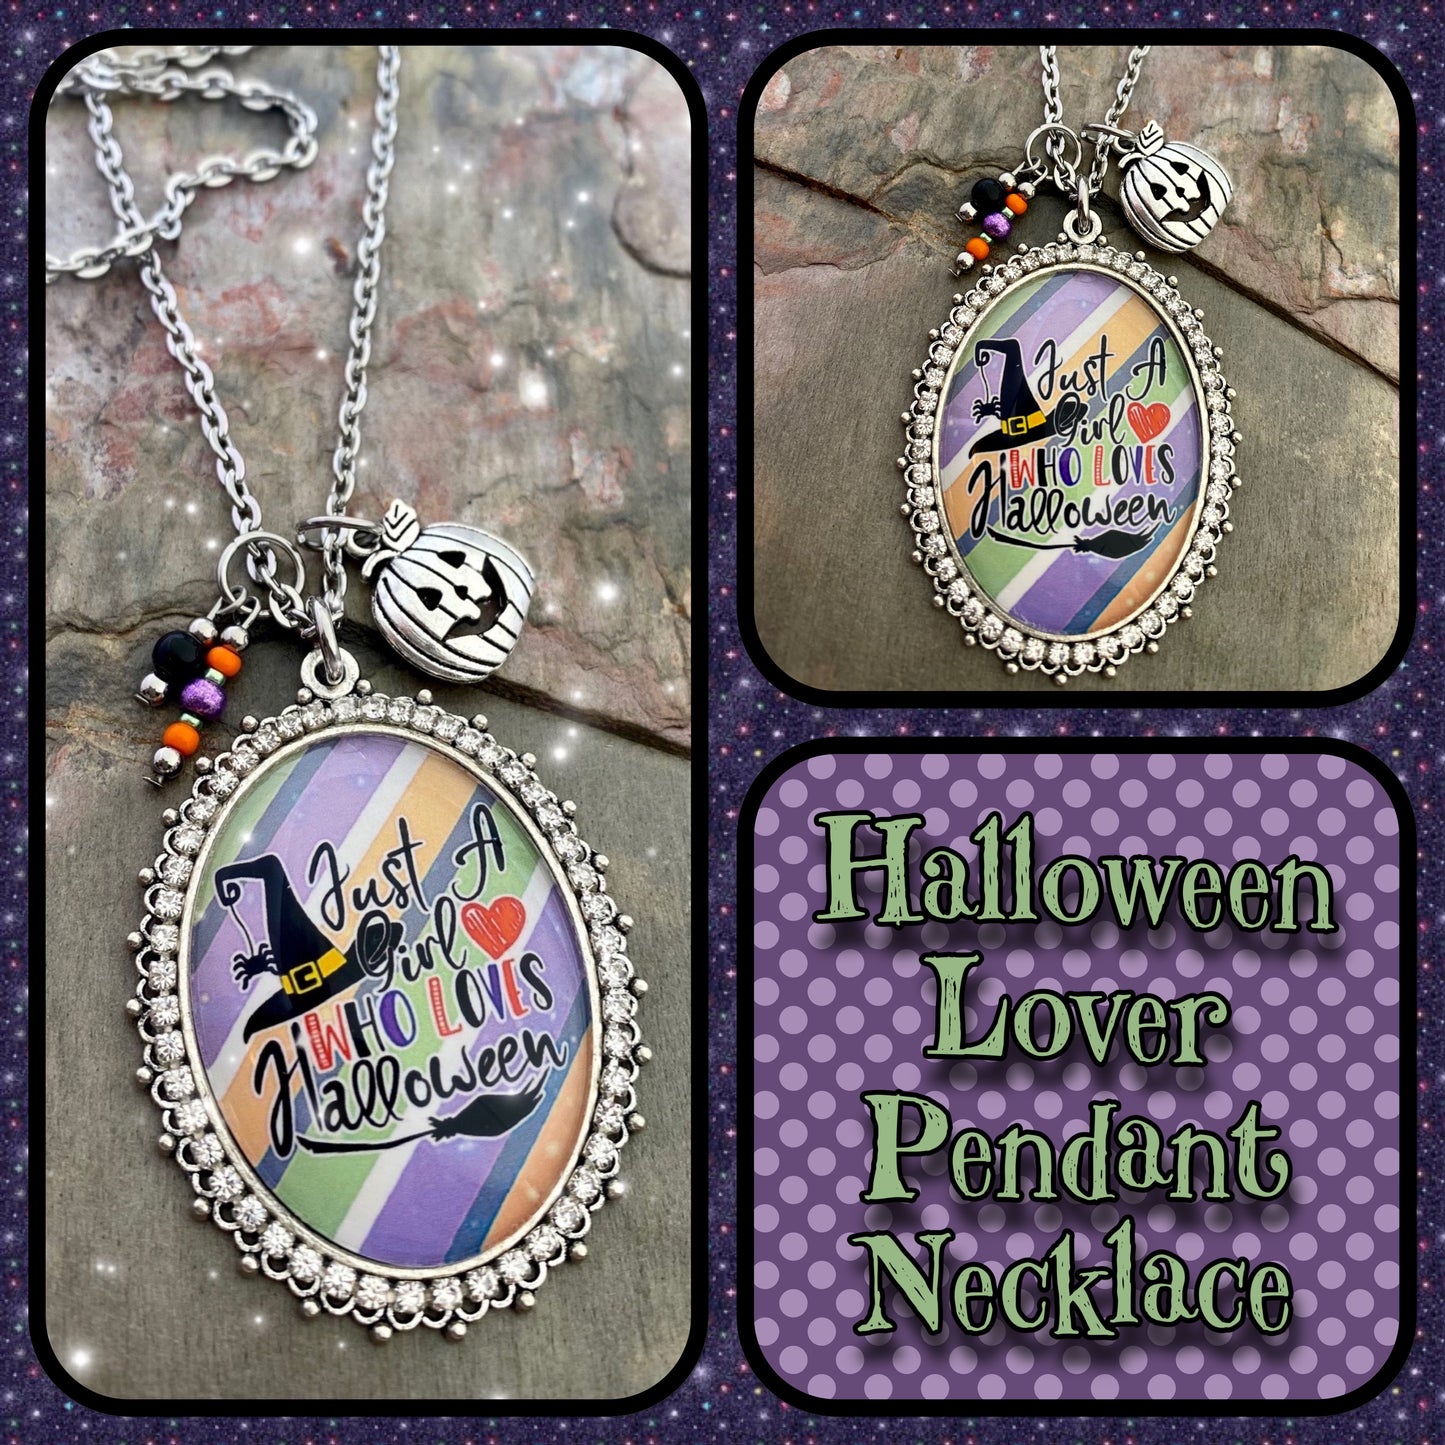 Halloween Lover Pendant Necklace